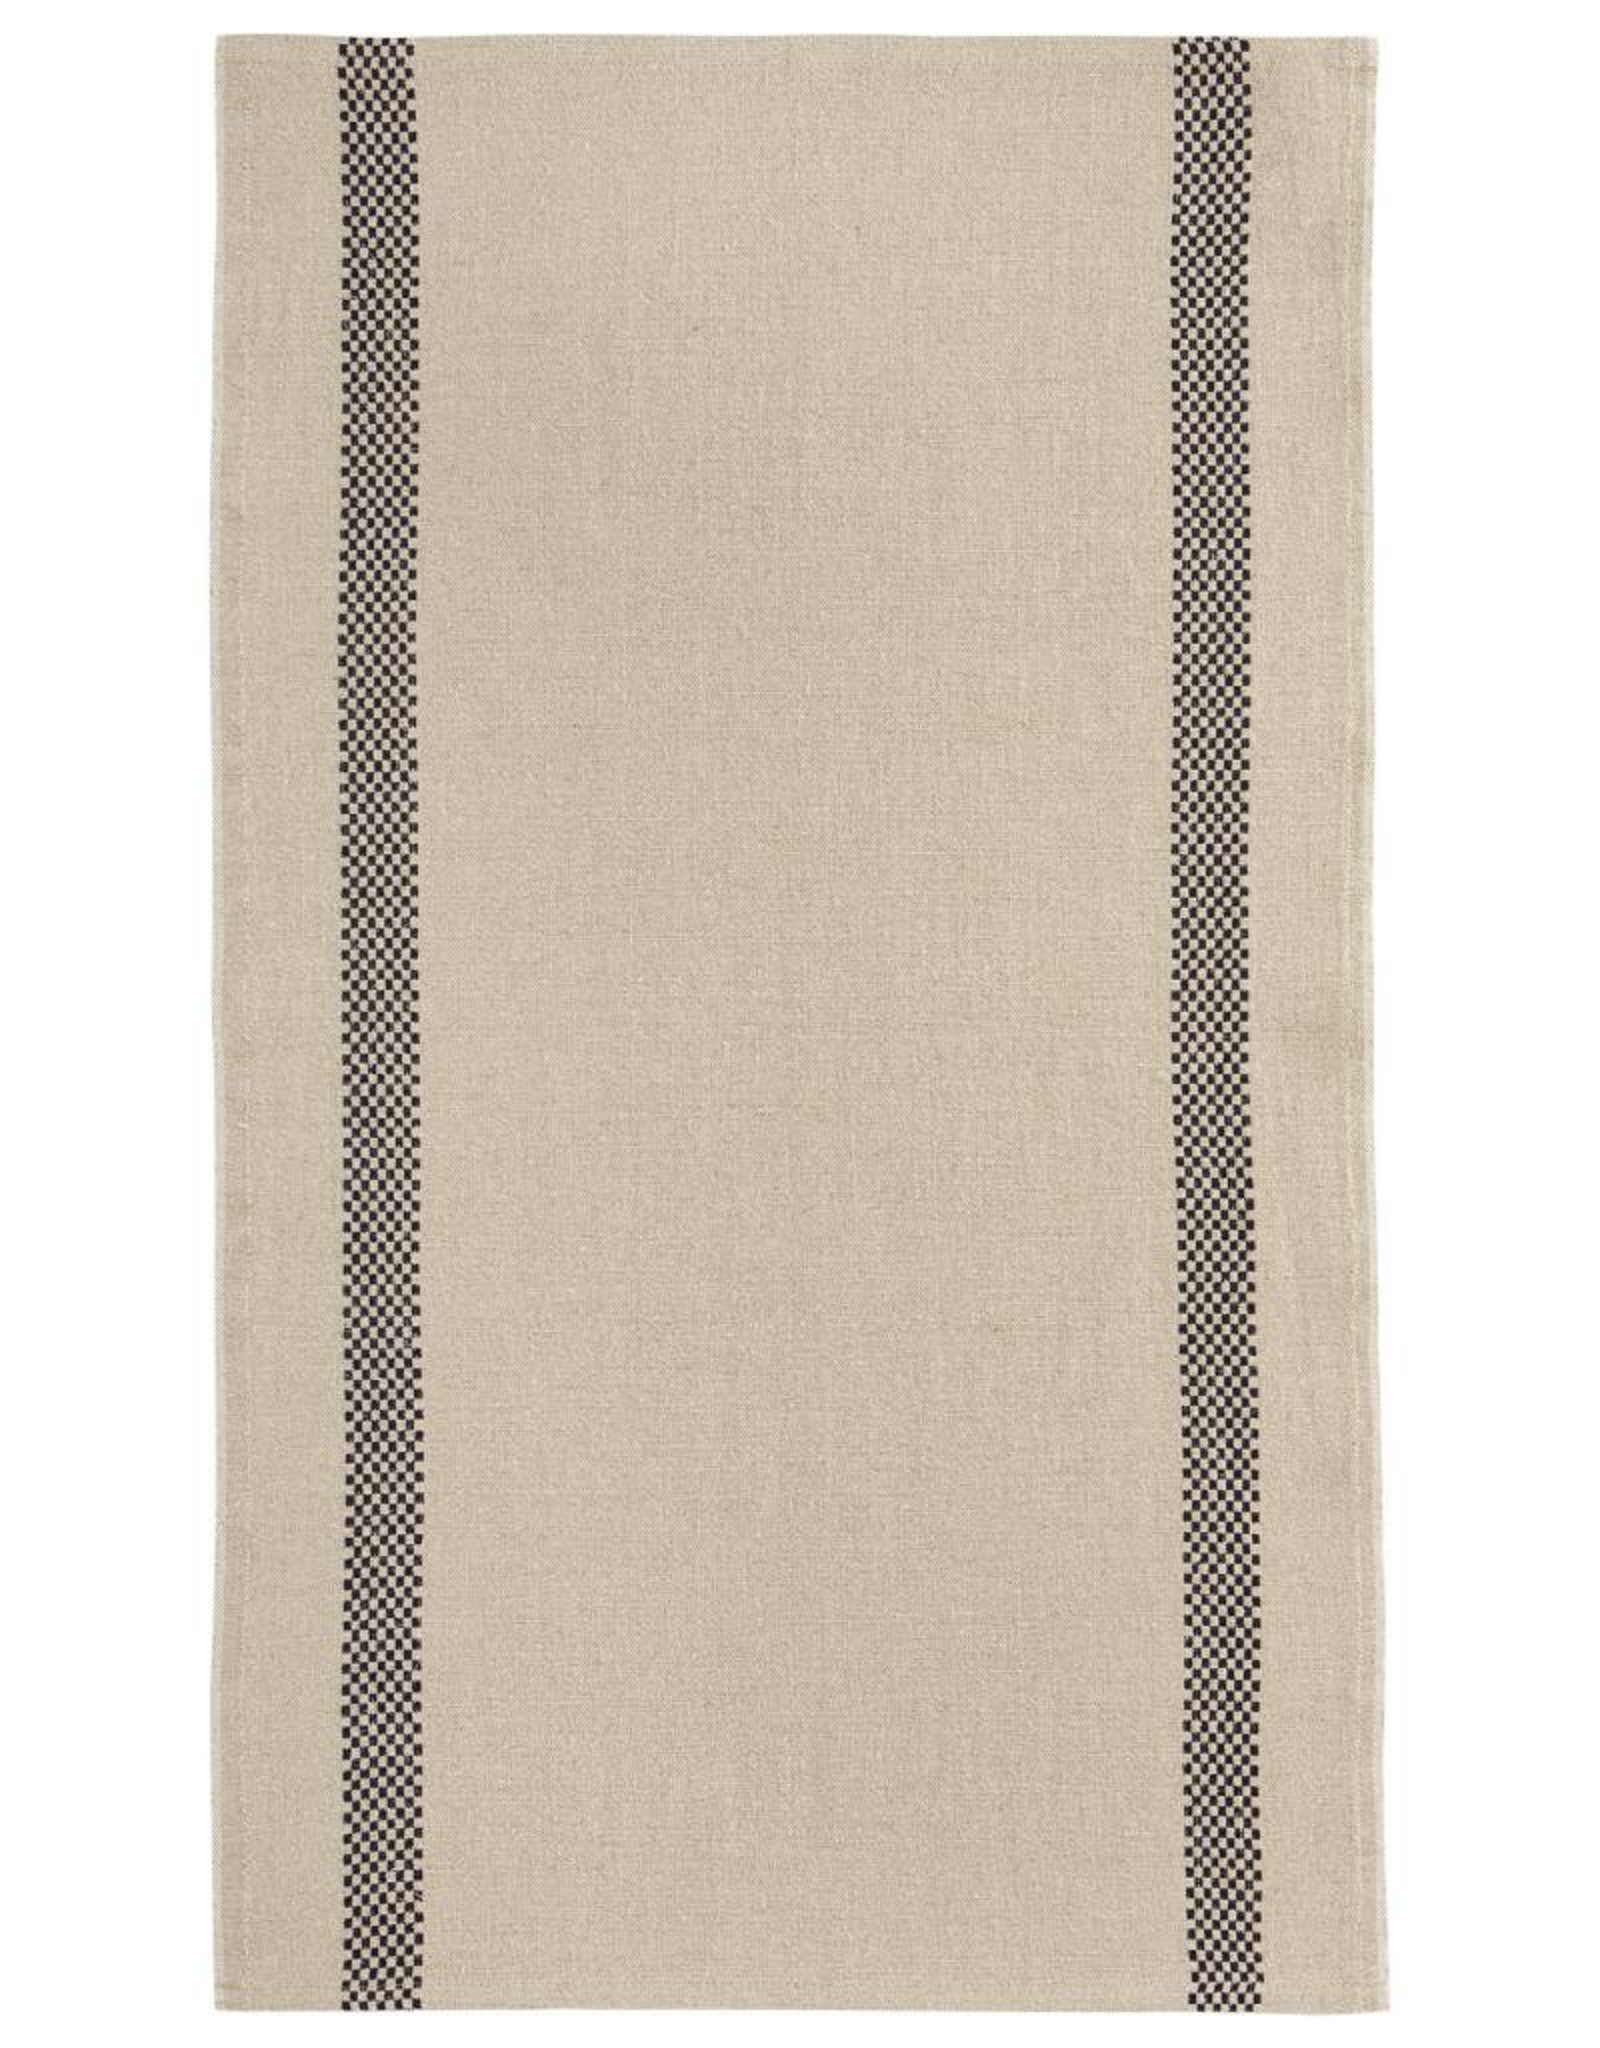 Charvet Editions Charvet Editions - Bistro/Tea Towel Natural & Black Lustucru - 18"x30"